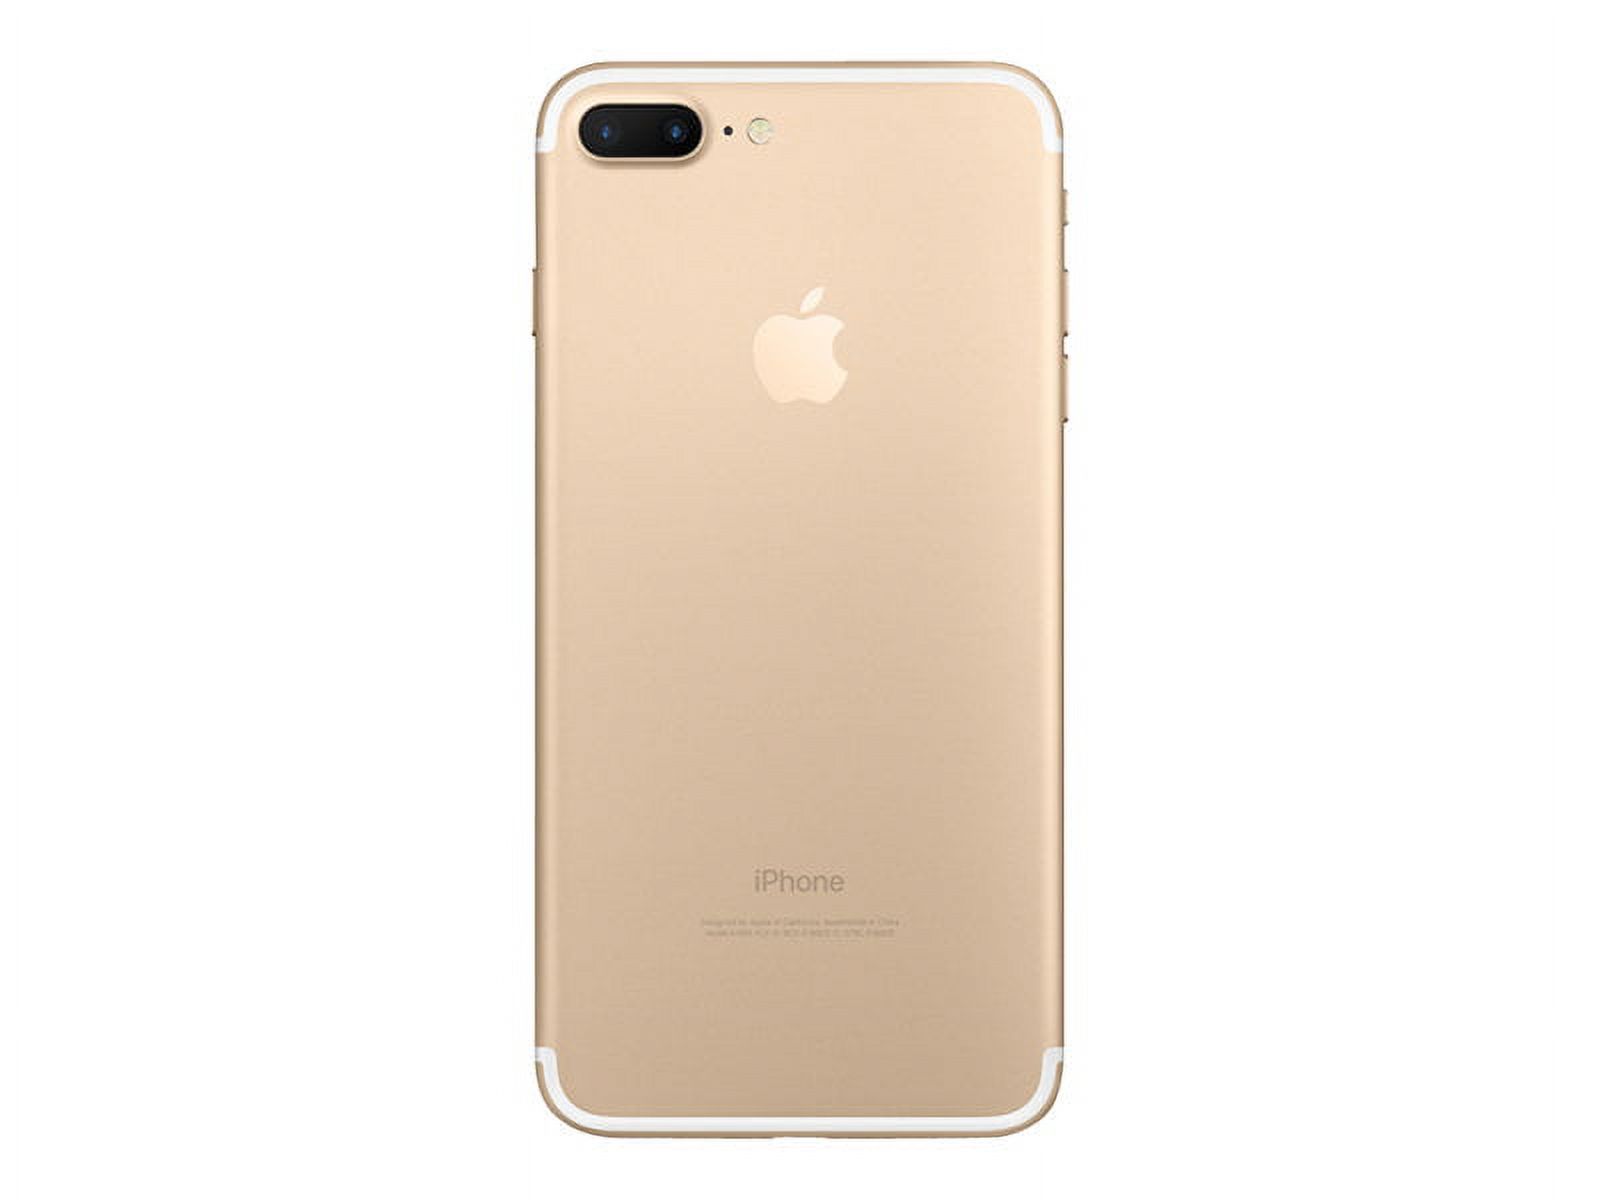 Apple iPhone 7 Plus 128GB Gold - image 4 of 4